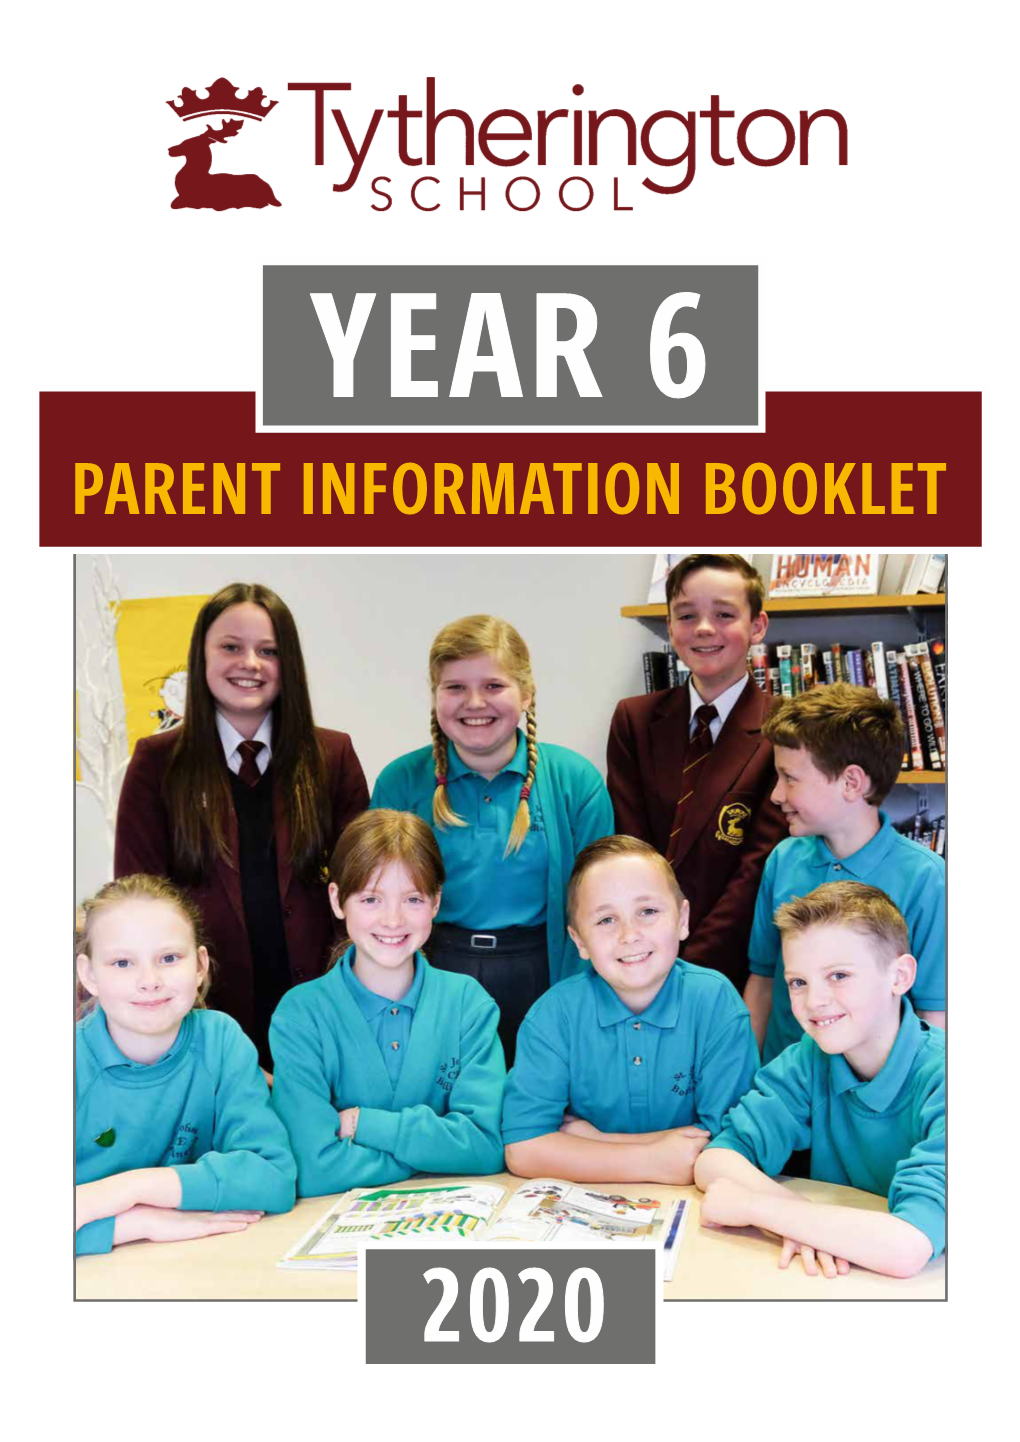 Parent Information Booklet